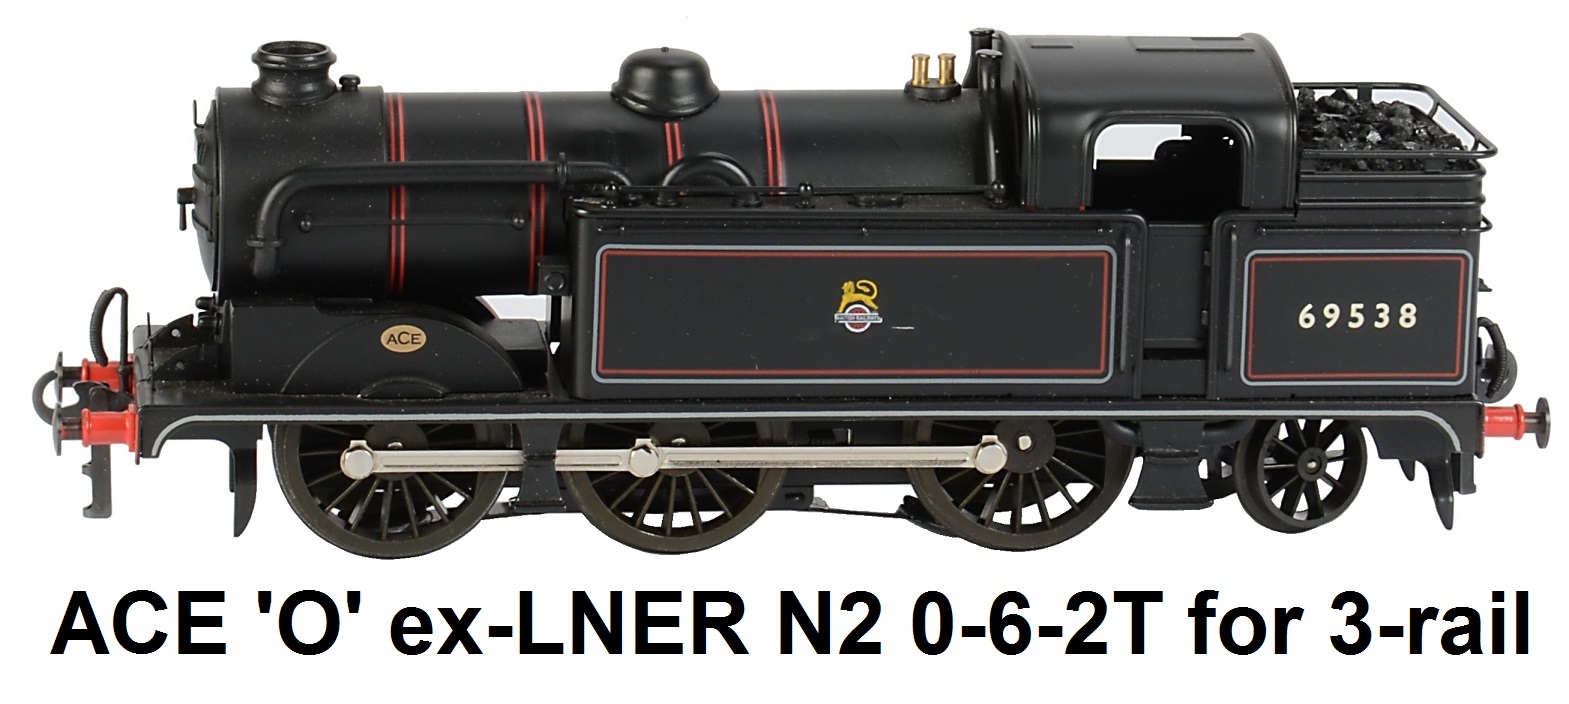 ACE Trains 'O' gauge 3-rail ex-LNER N2 0-6-2T Locomotive,